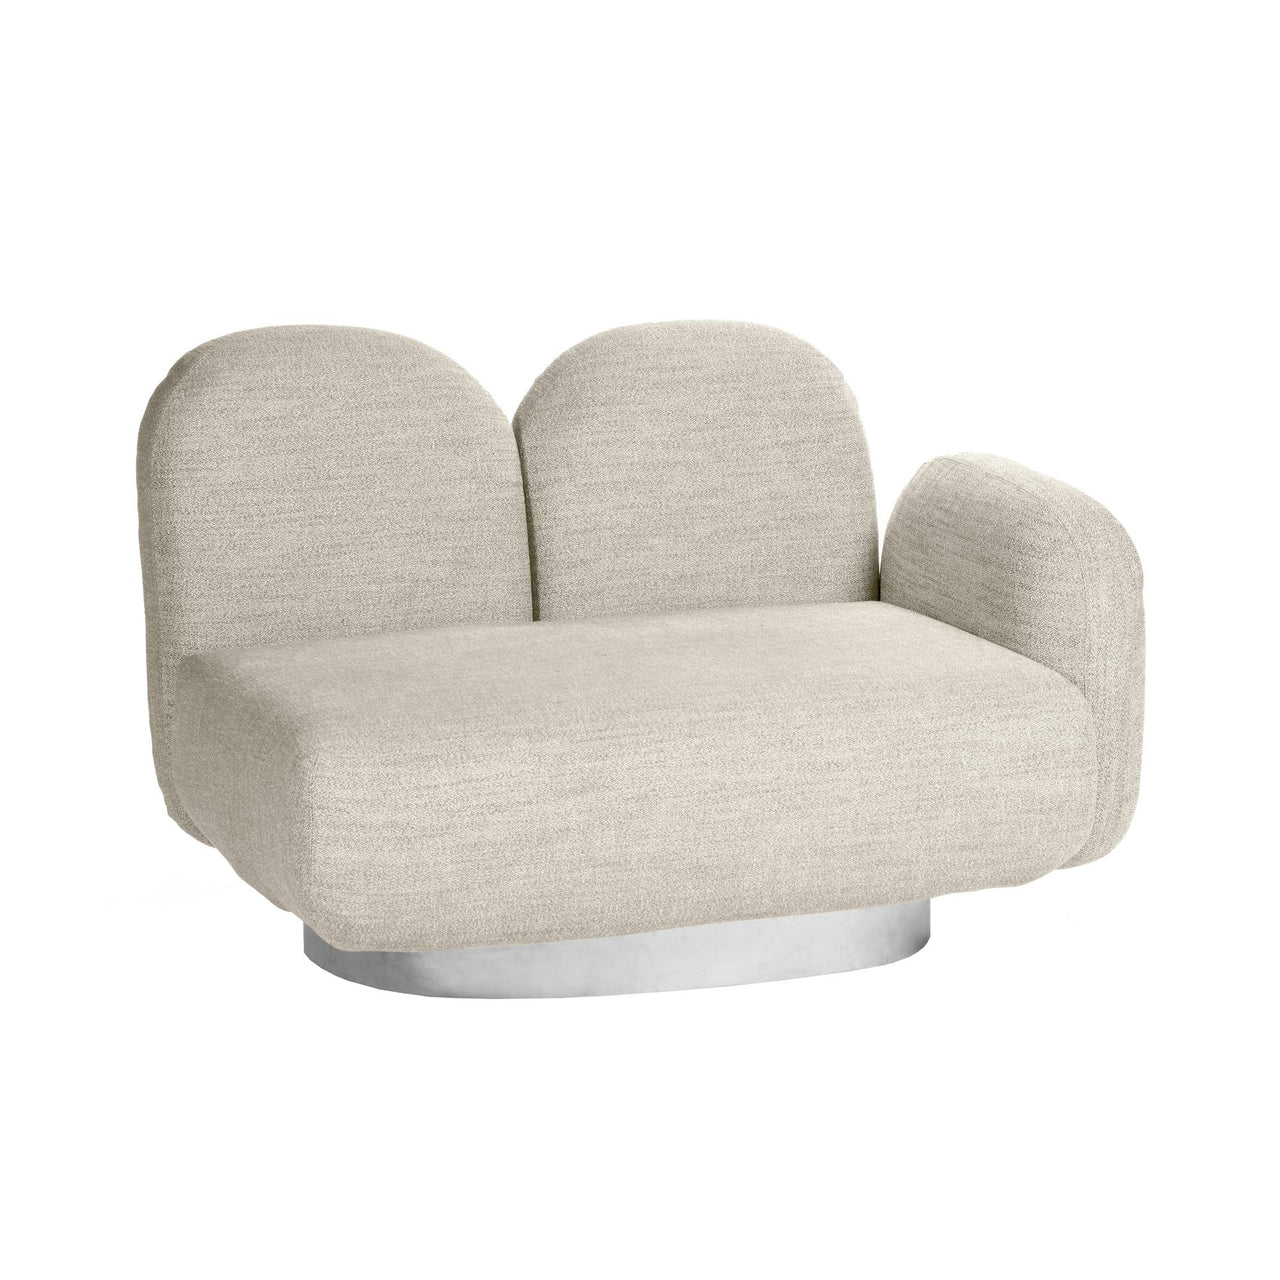 Assemble 1 Seat Sofa: Gijon Sand + With Left Arm